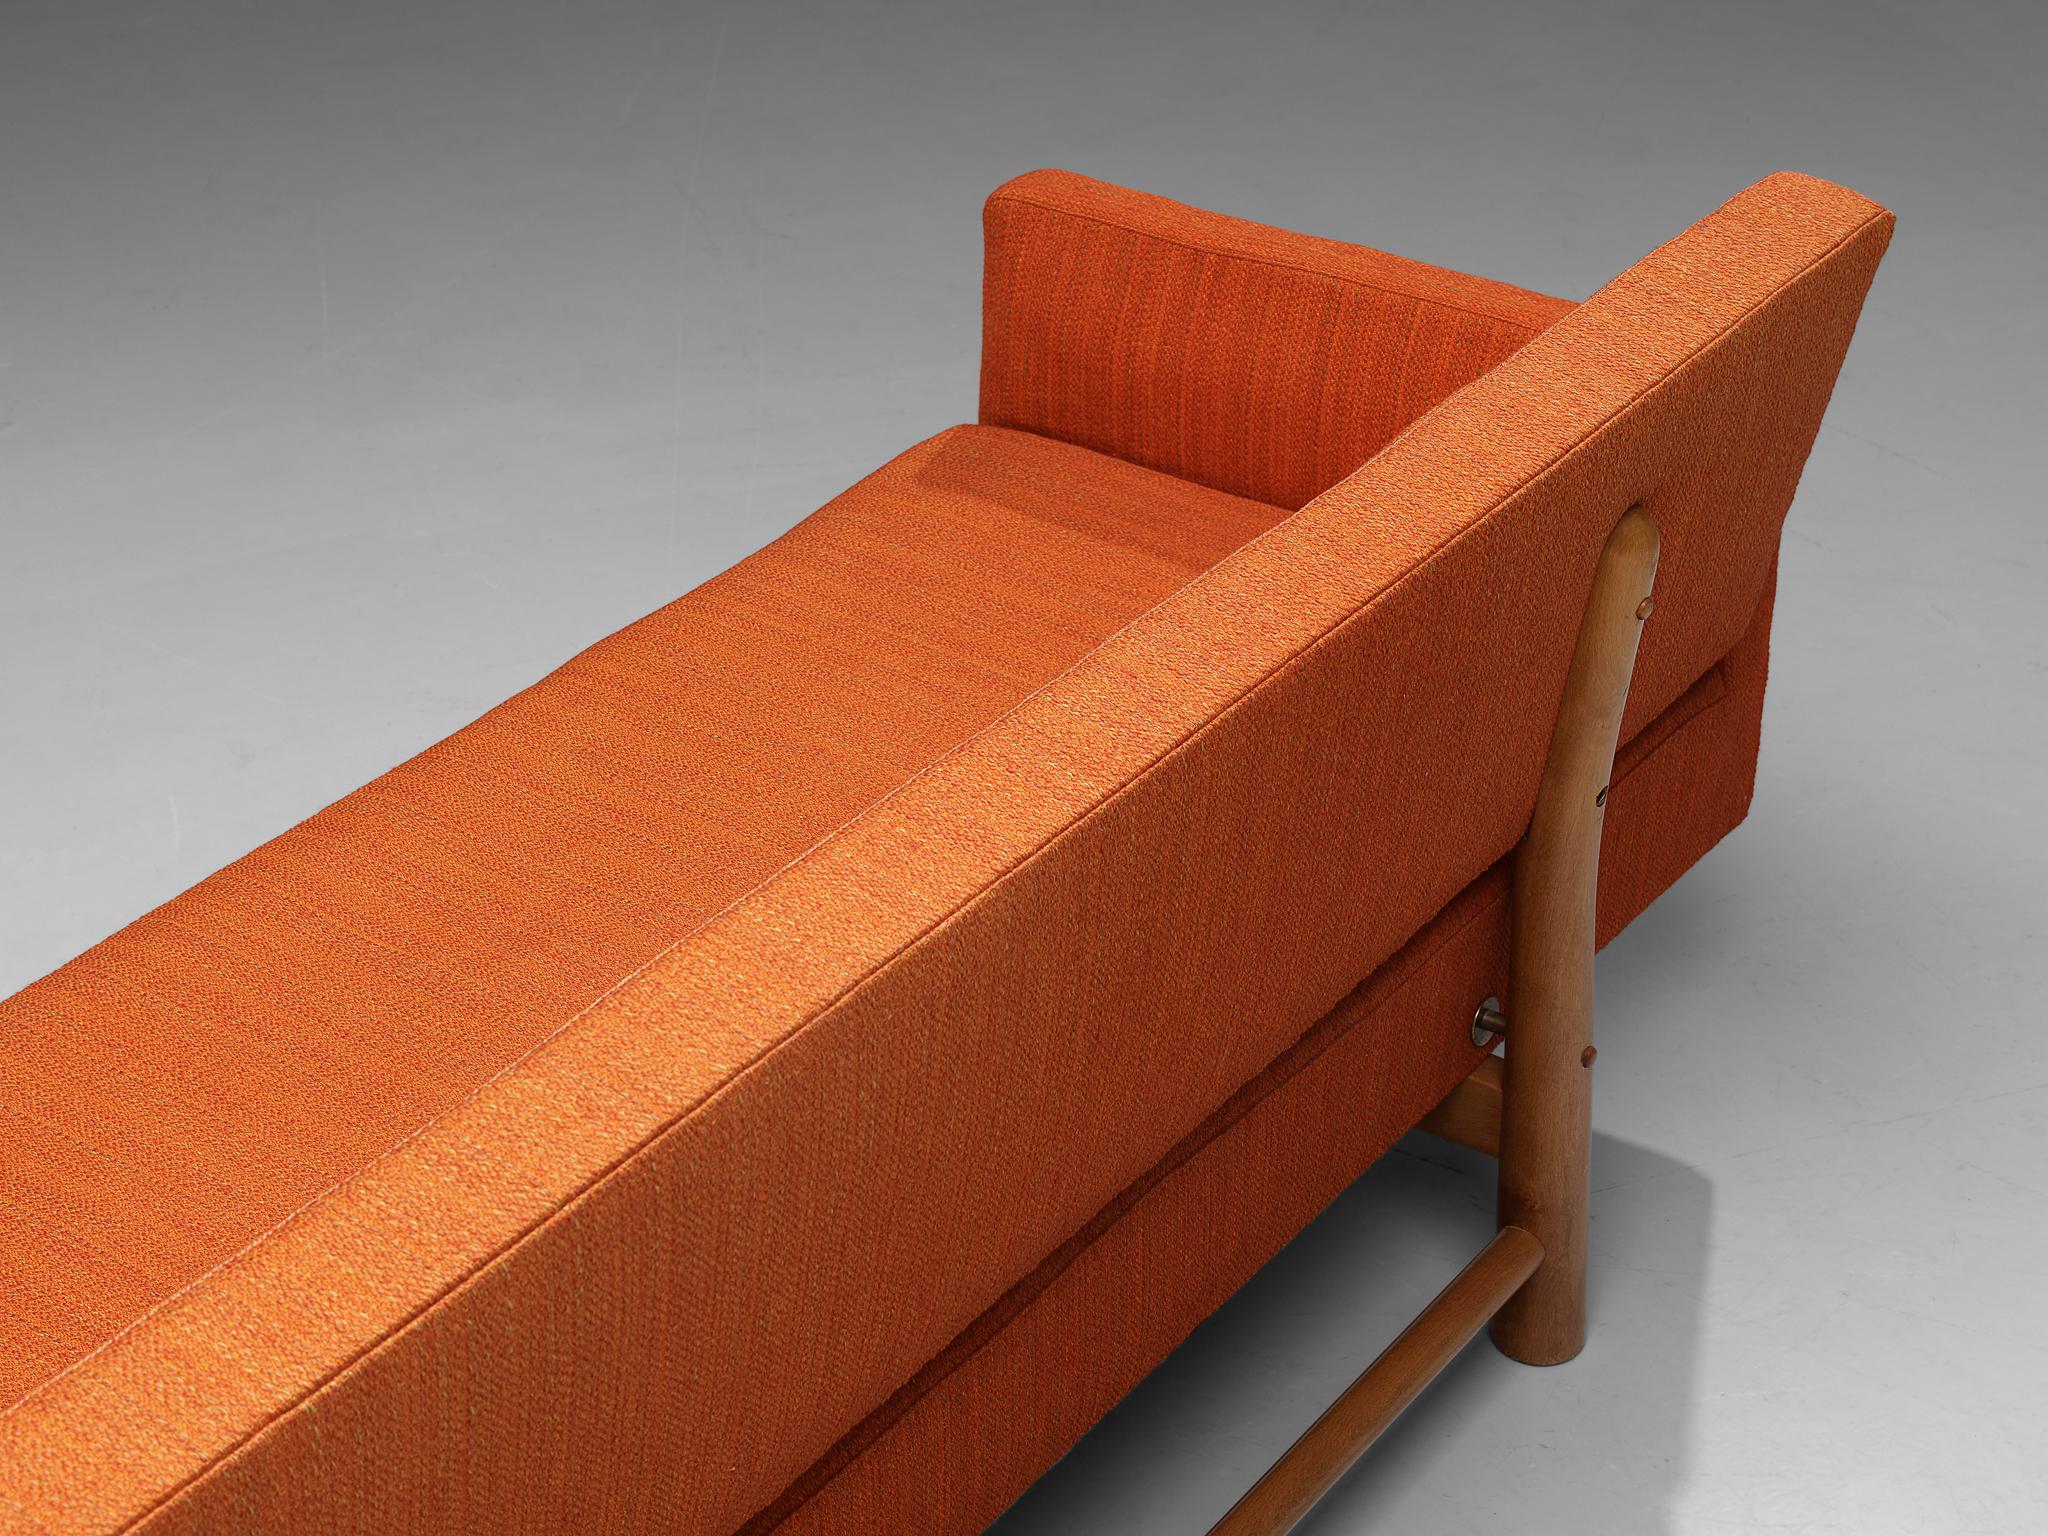 American Edward Wormley 'New York' Sofa in Orange Upholstery